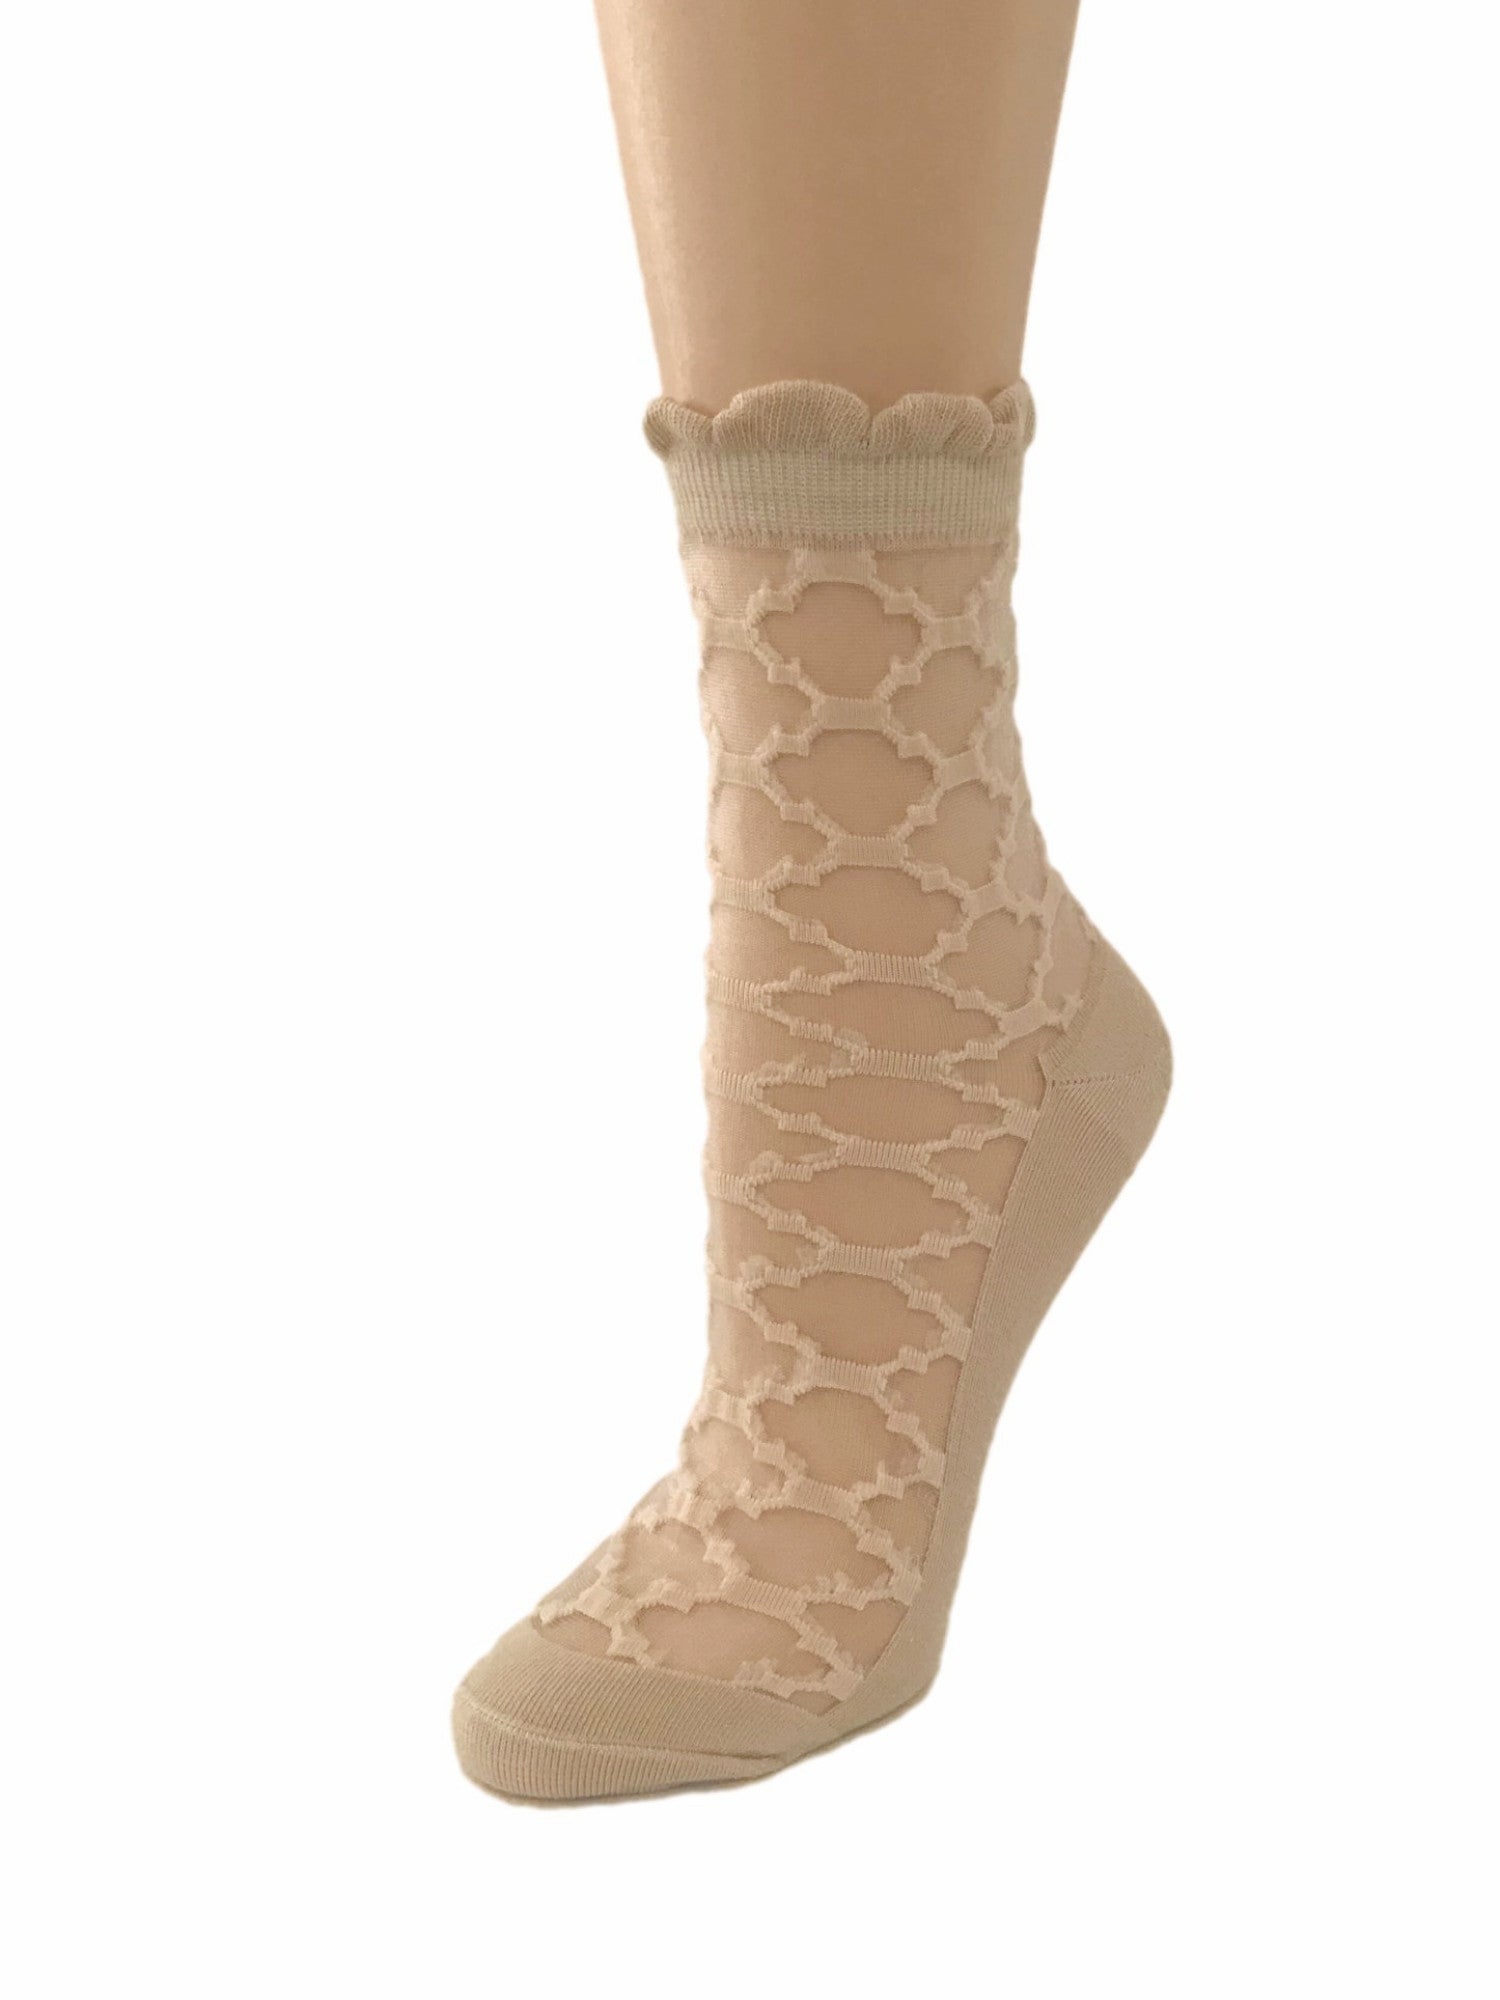 Patterned Skin Sheer Socks - Global Trendz Fashion®